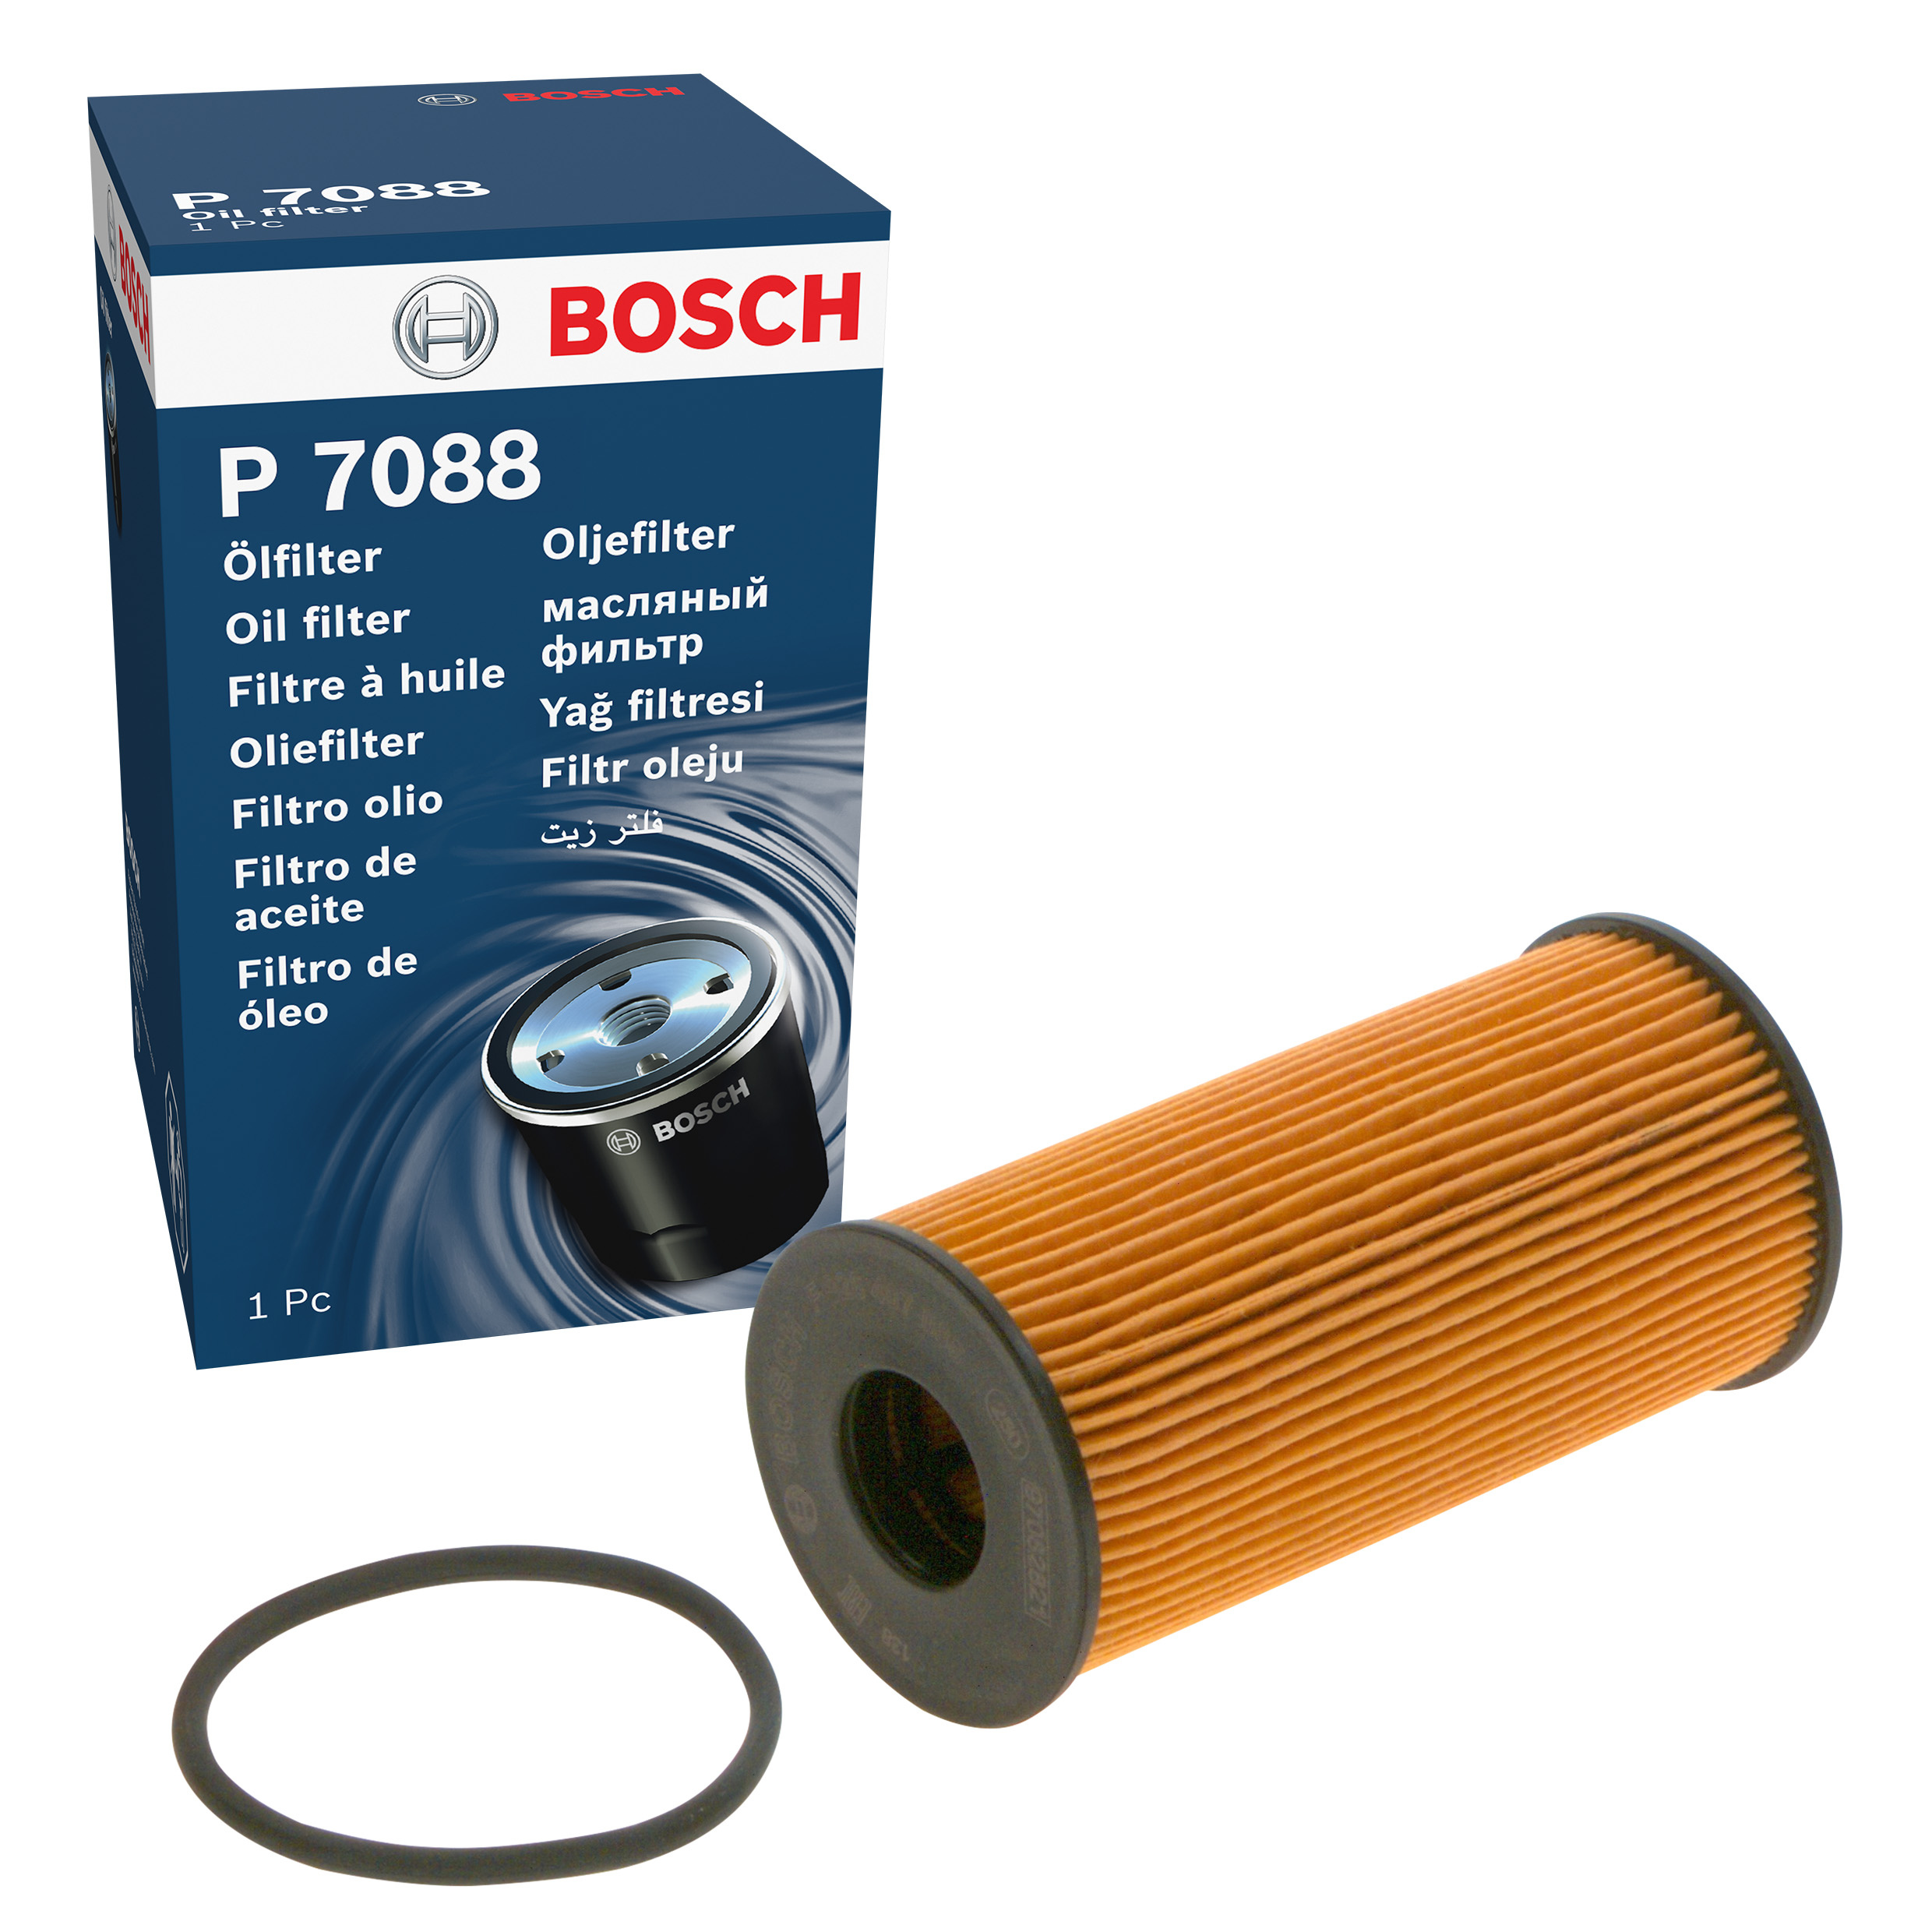 Oil Filter P7088 Bosch   - Oil filters